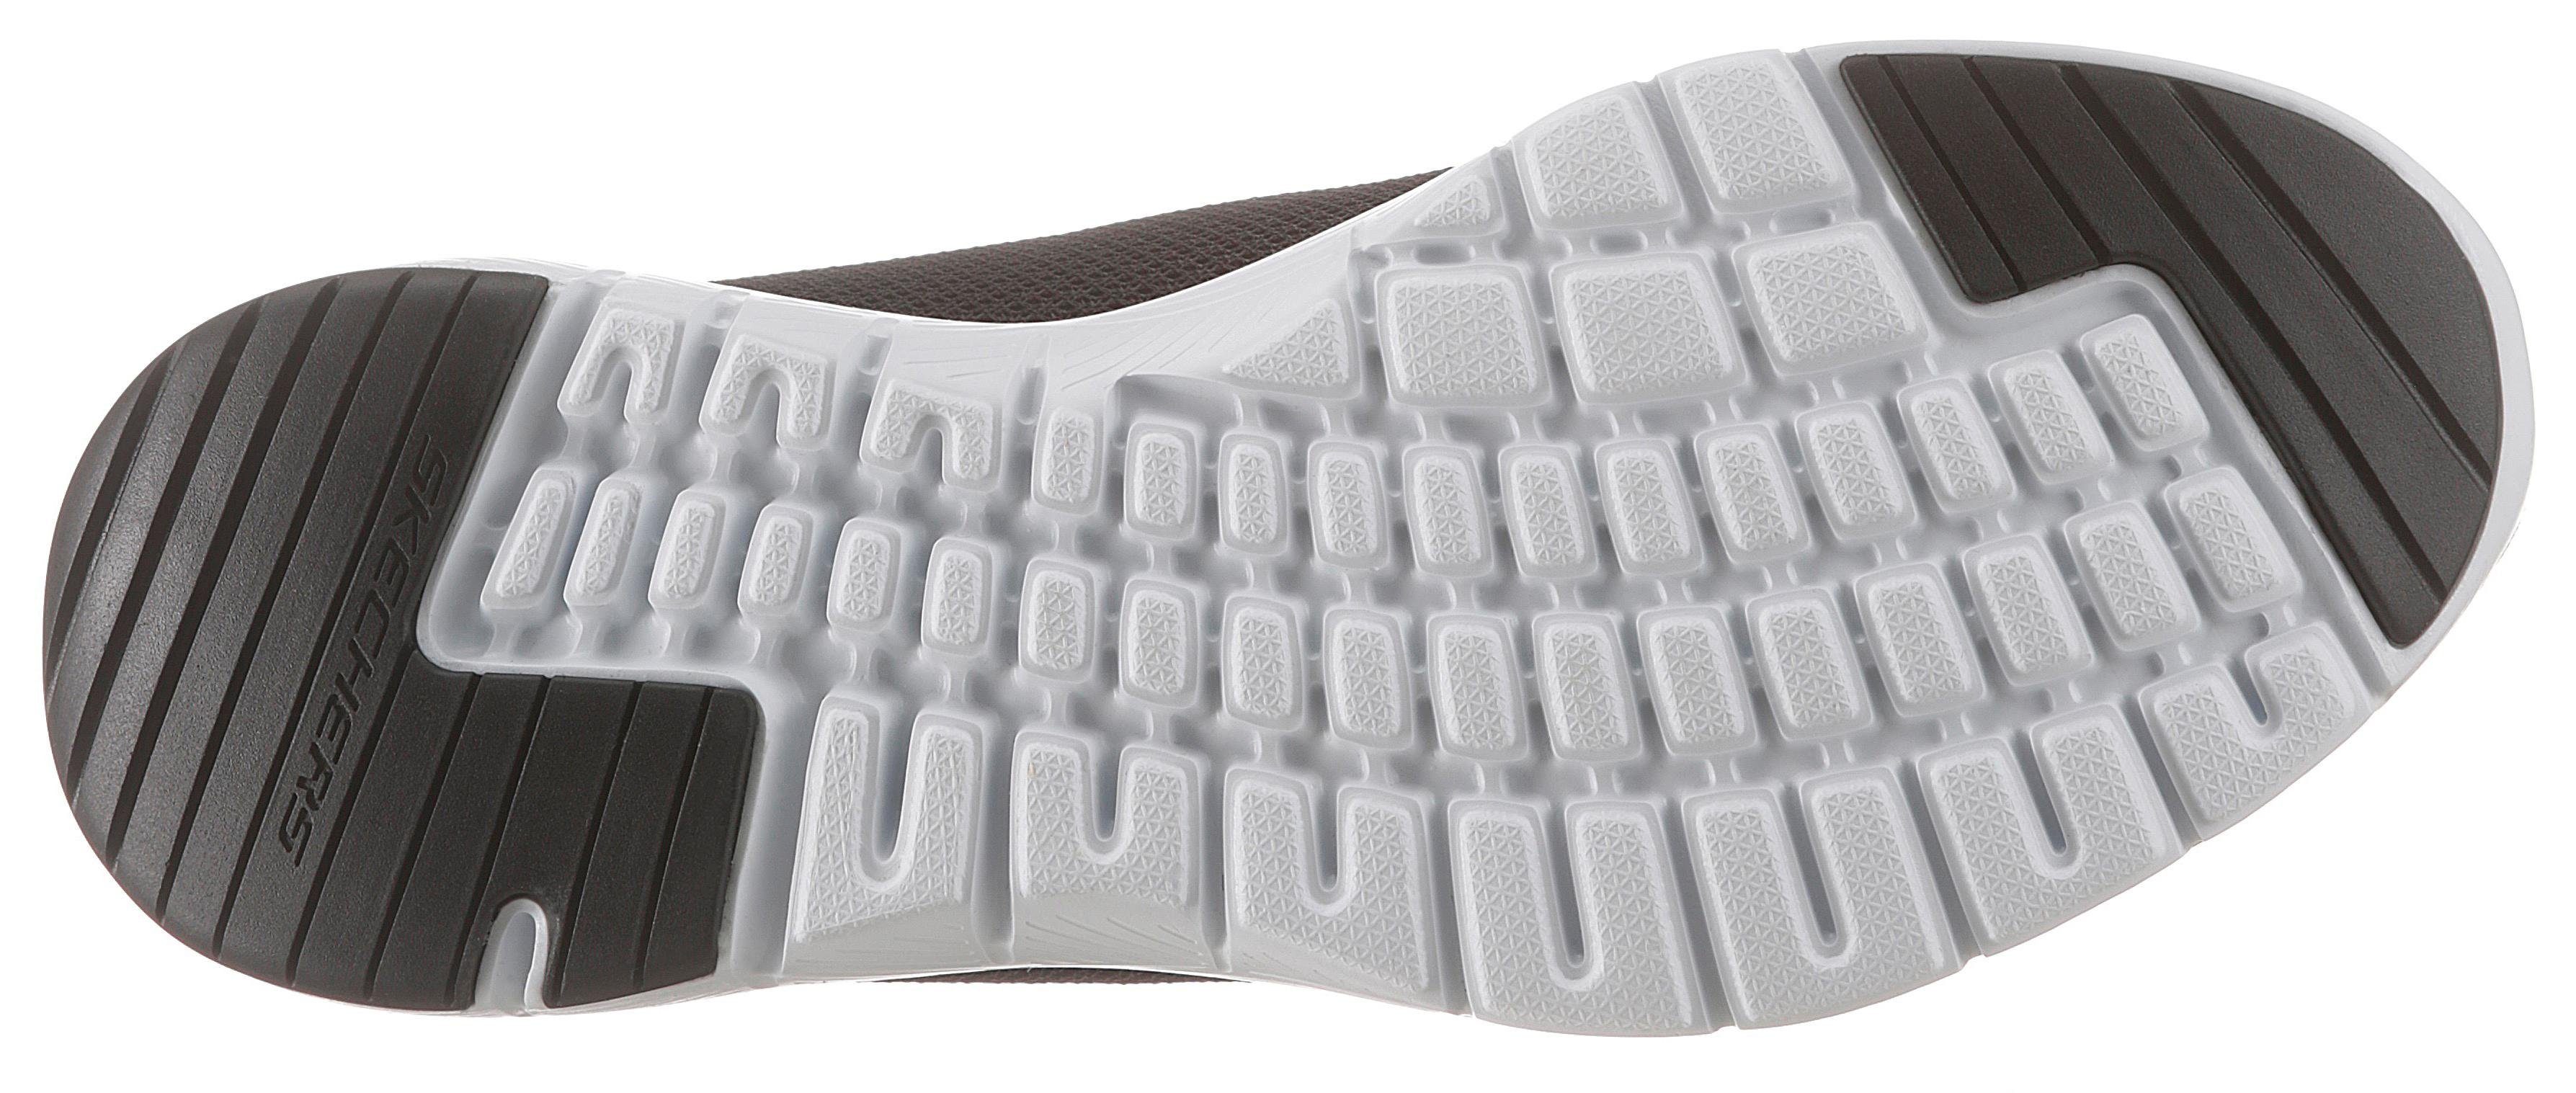 Flex Sneaker Insight 3.0 - Ausstattung Memory Foam First mit Appeal schwarz-rosa Skechers